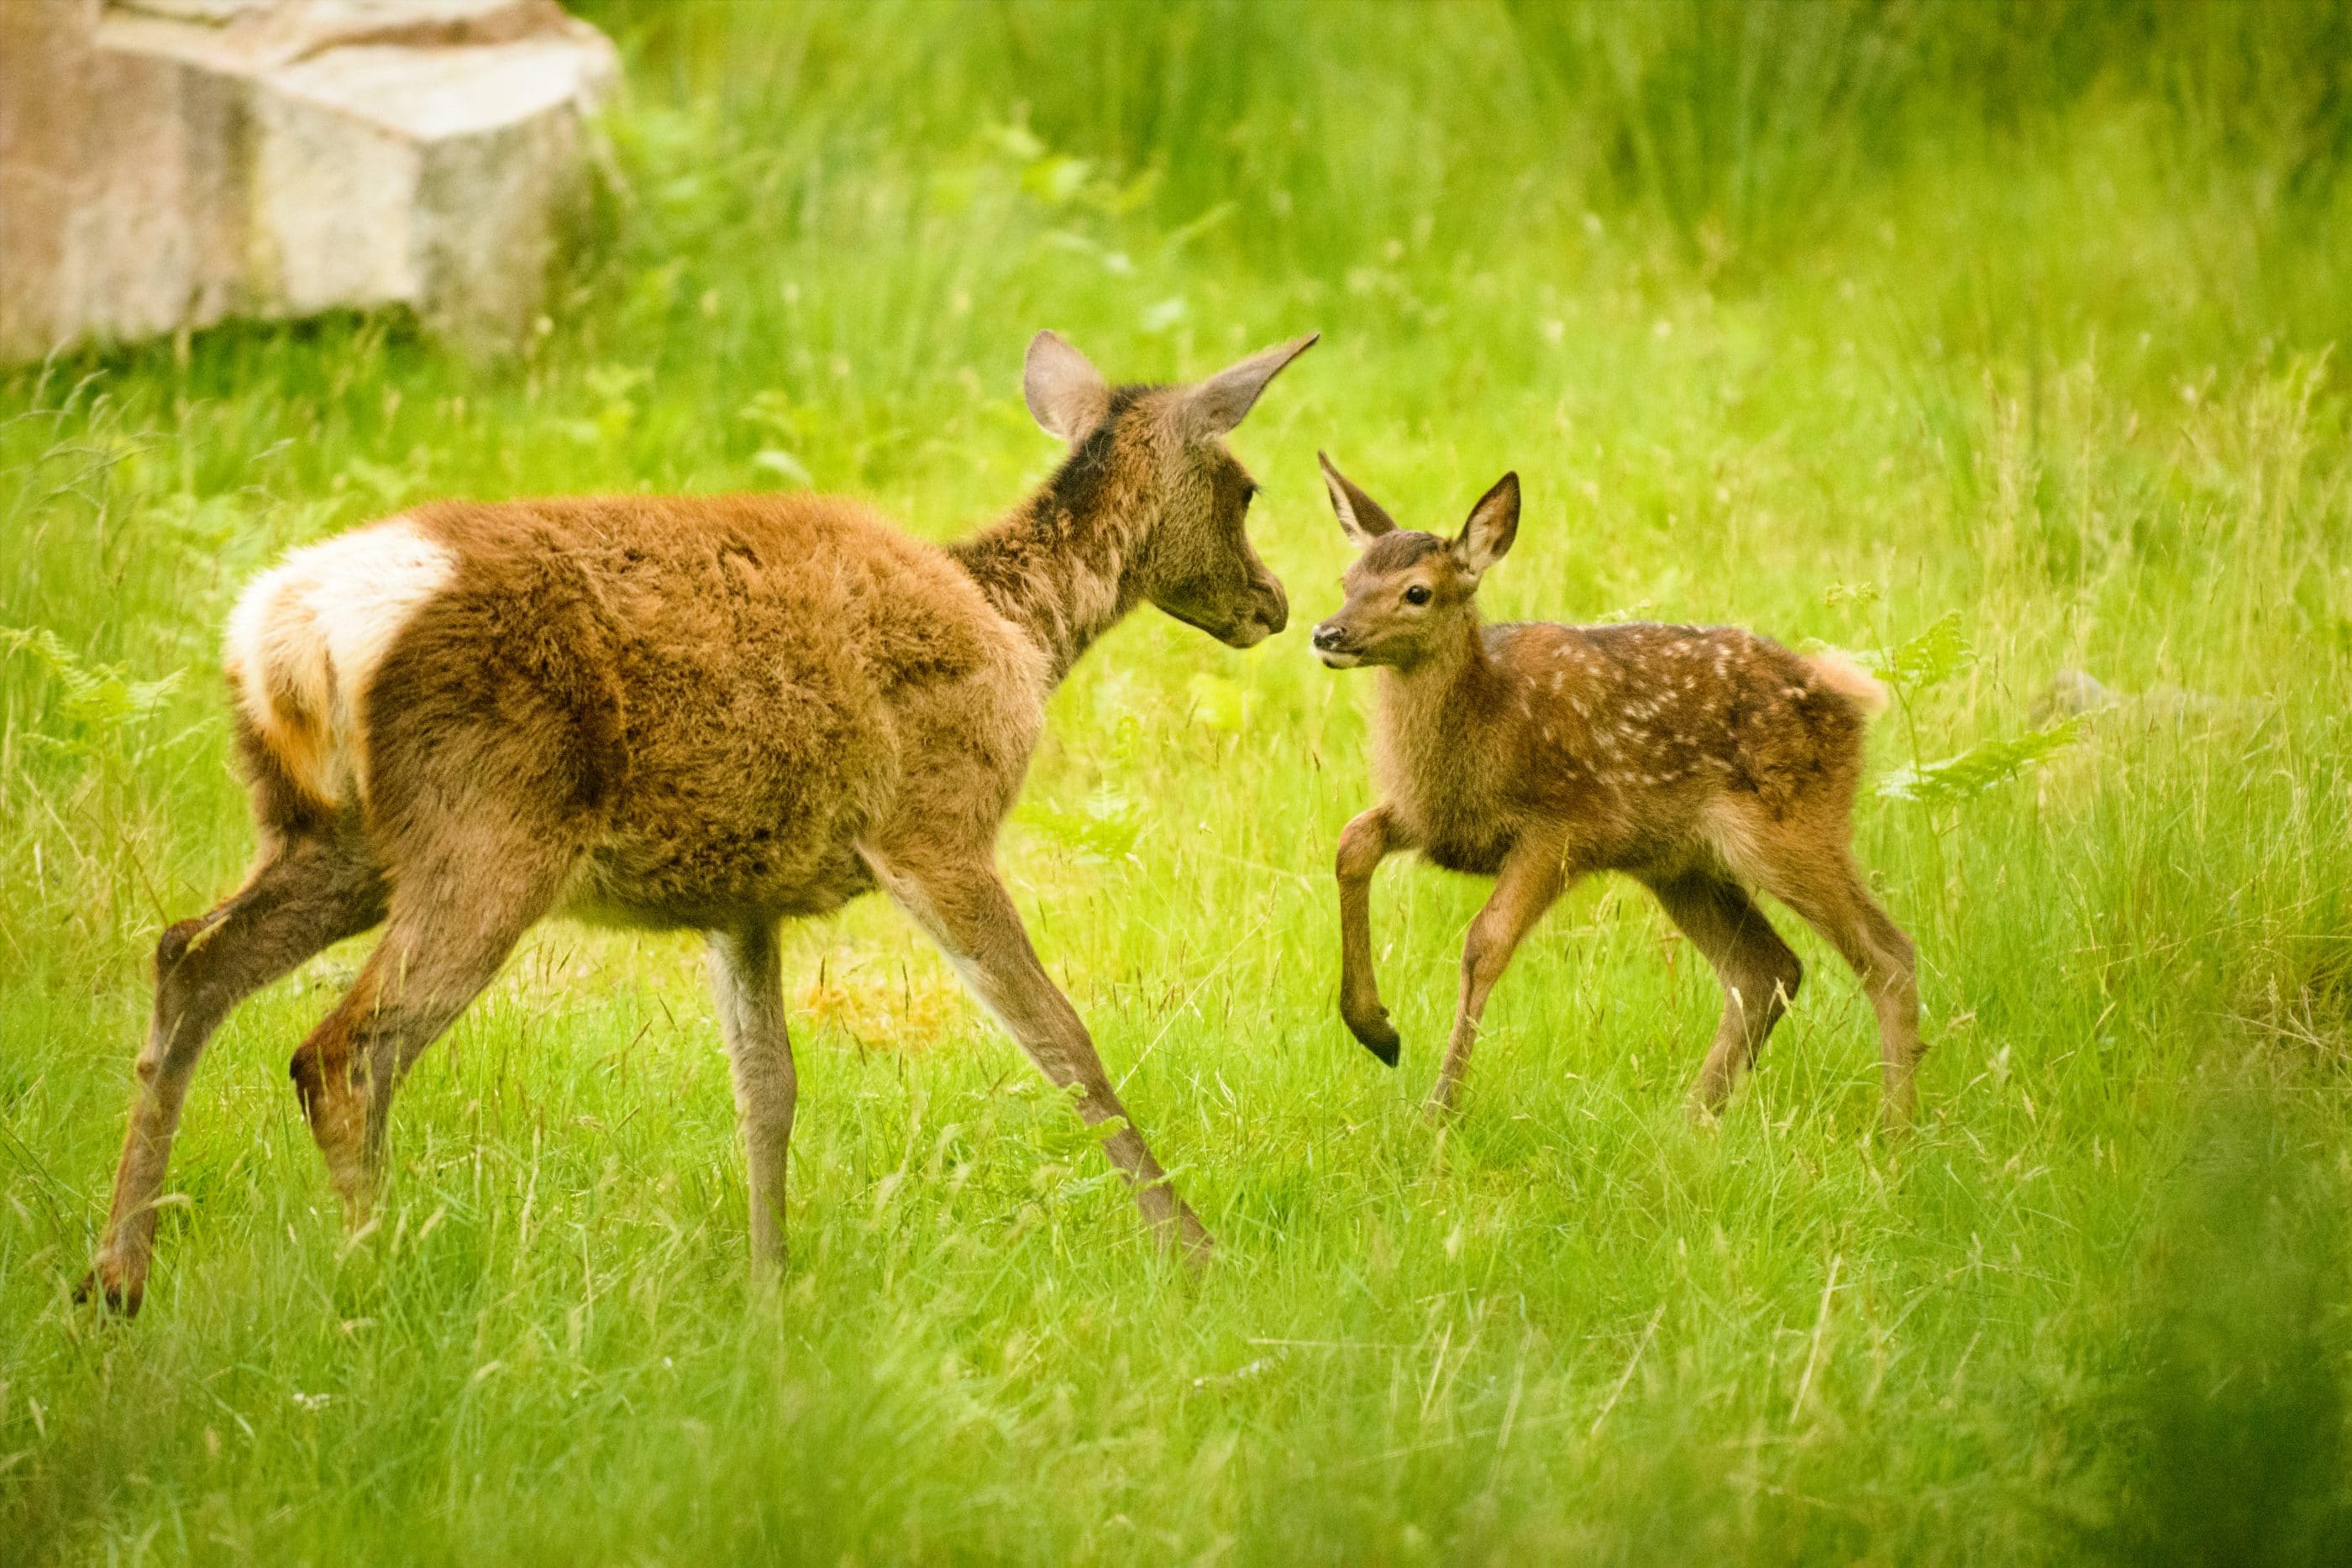 Mummy and baby deer, Scotland